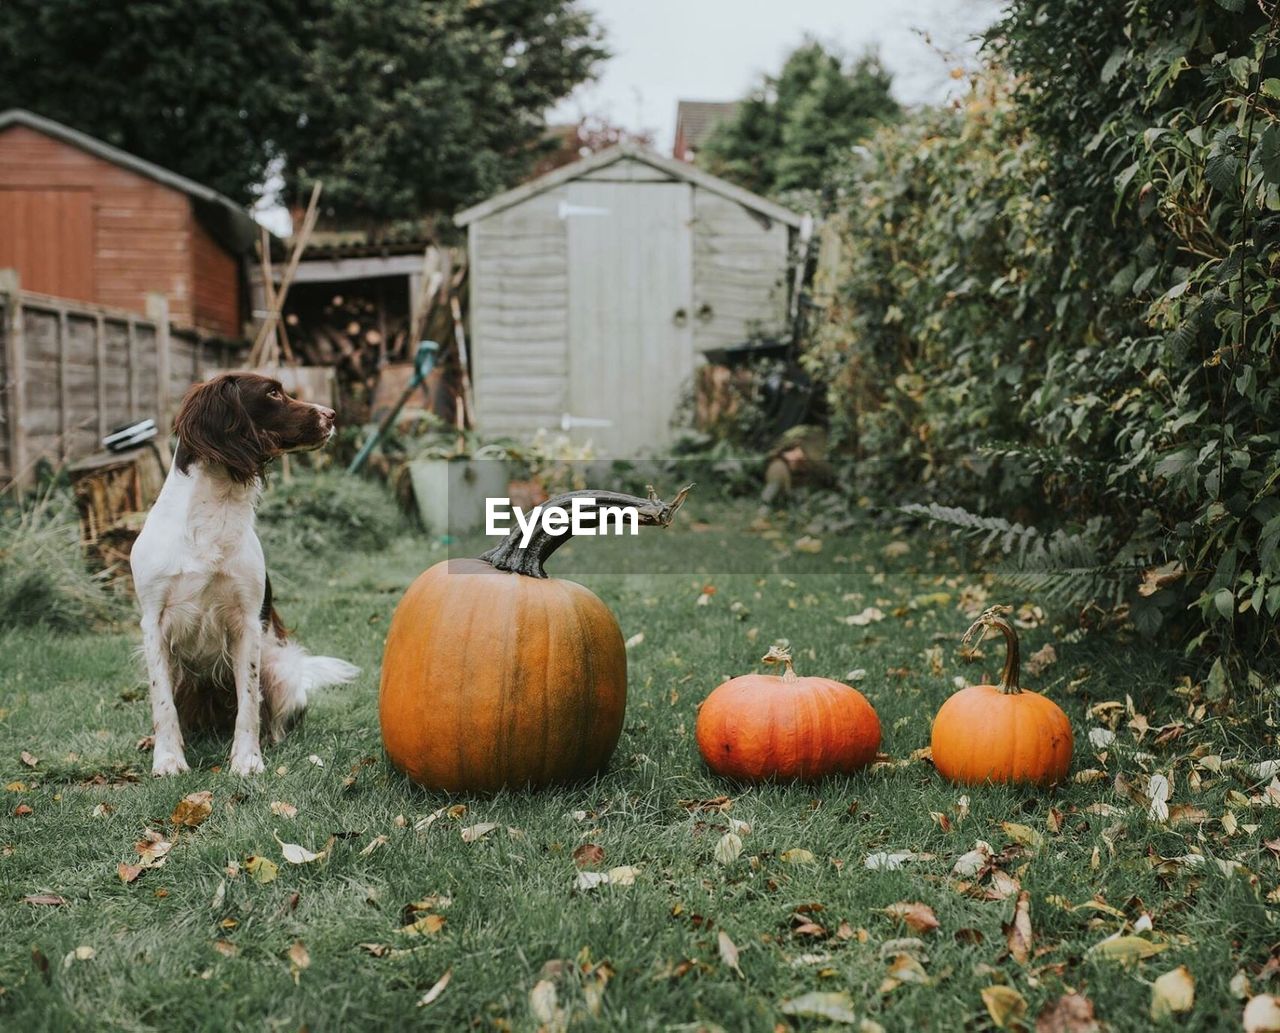 Dog sitting by pumpkins on field